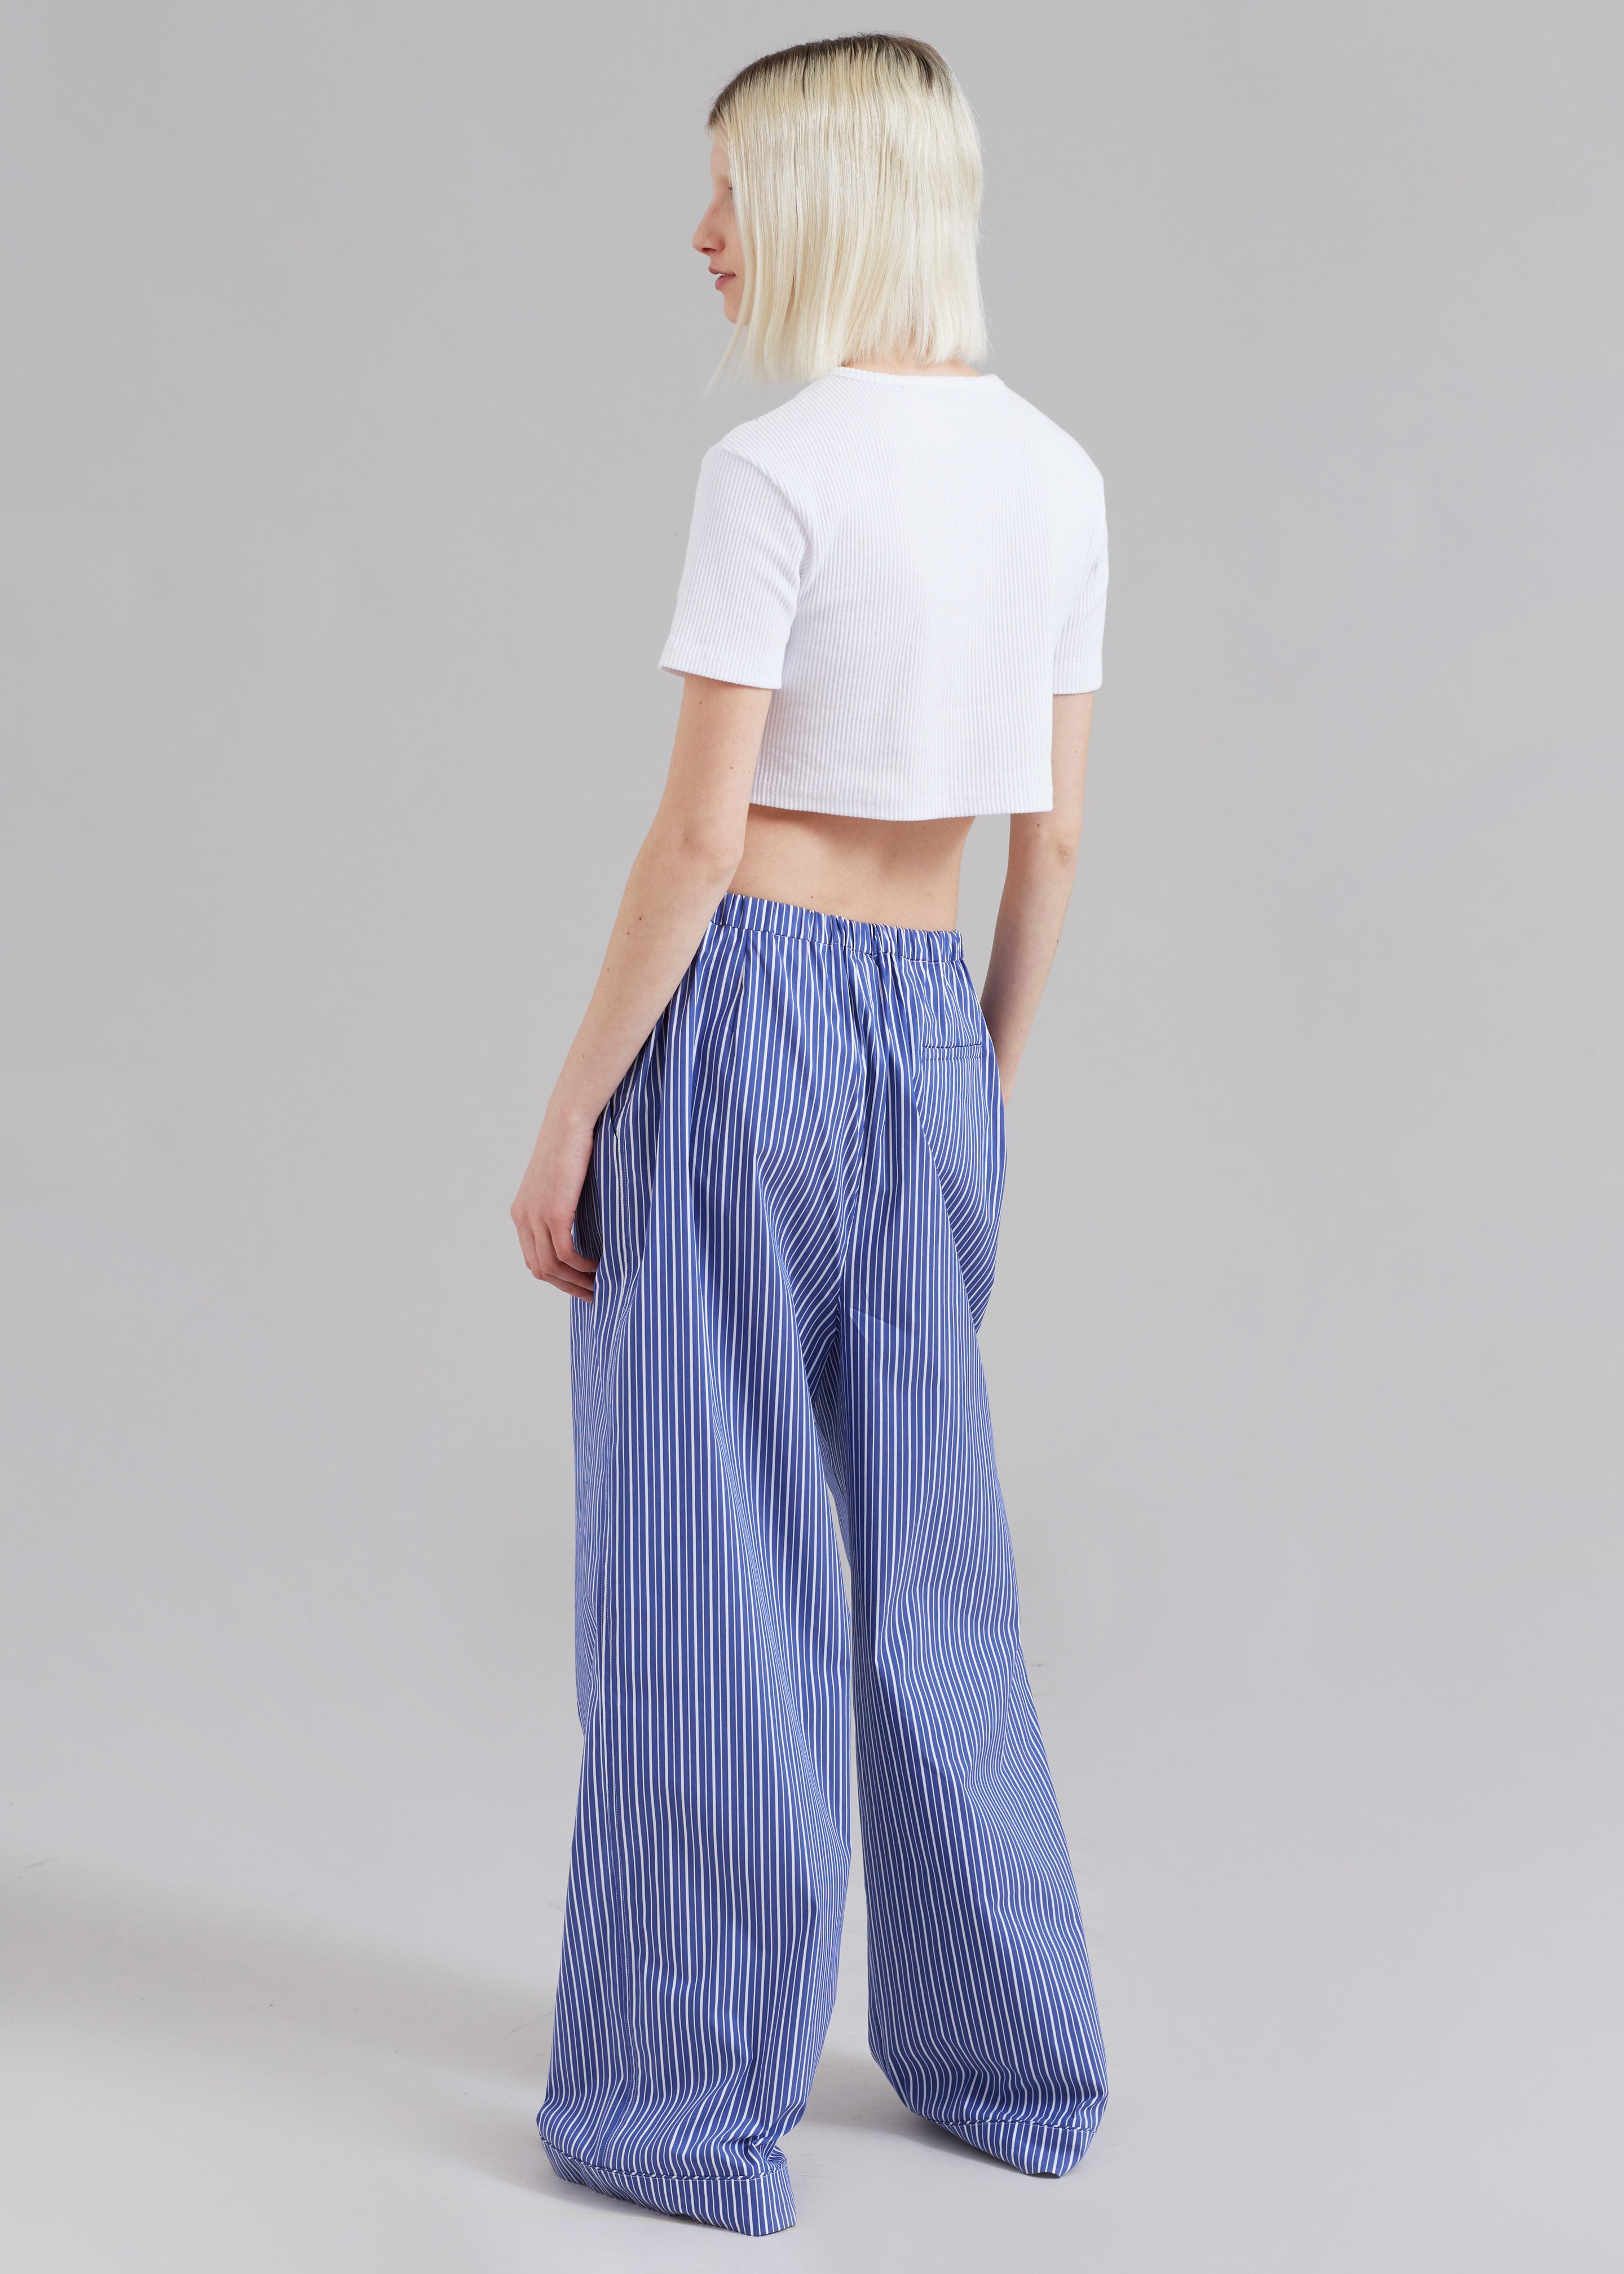 Mirca Elastic Pants - Blue Multi Stripe